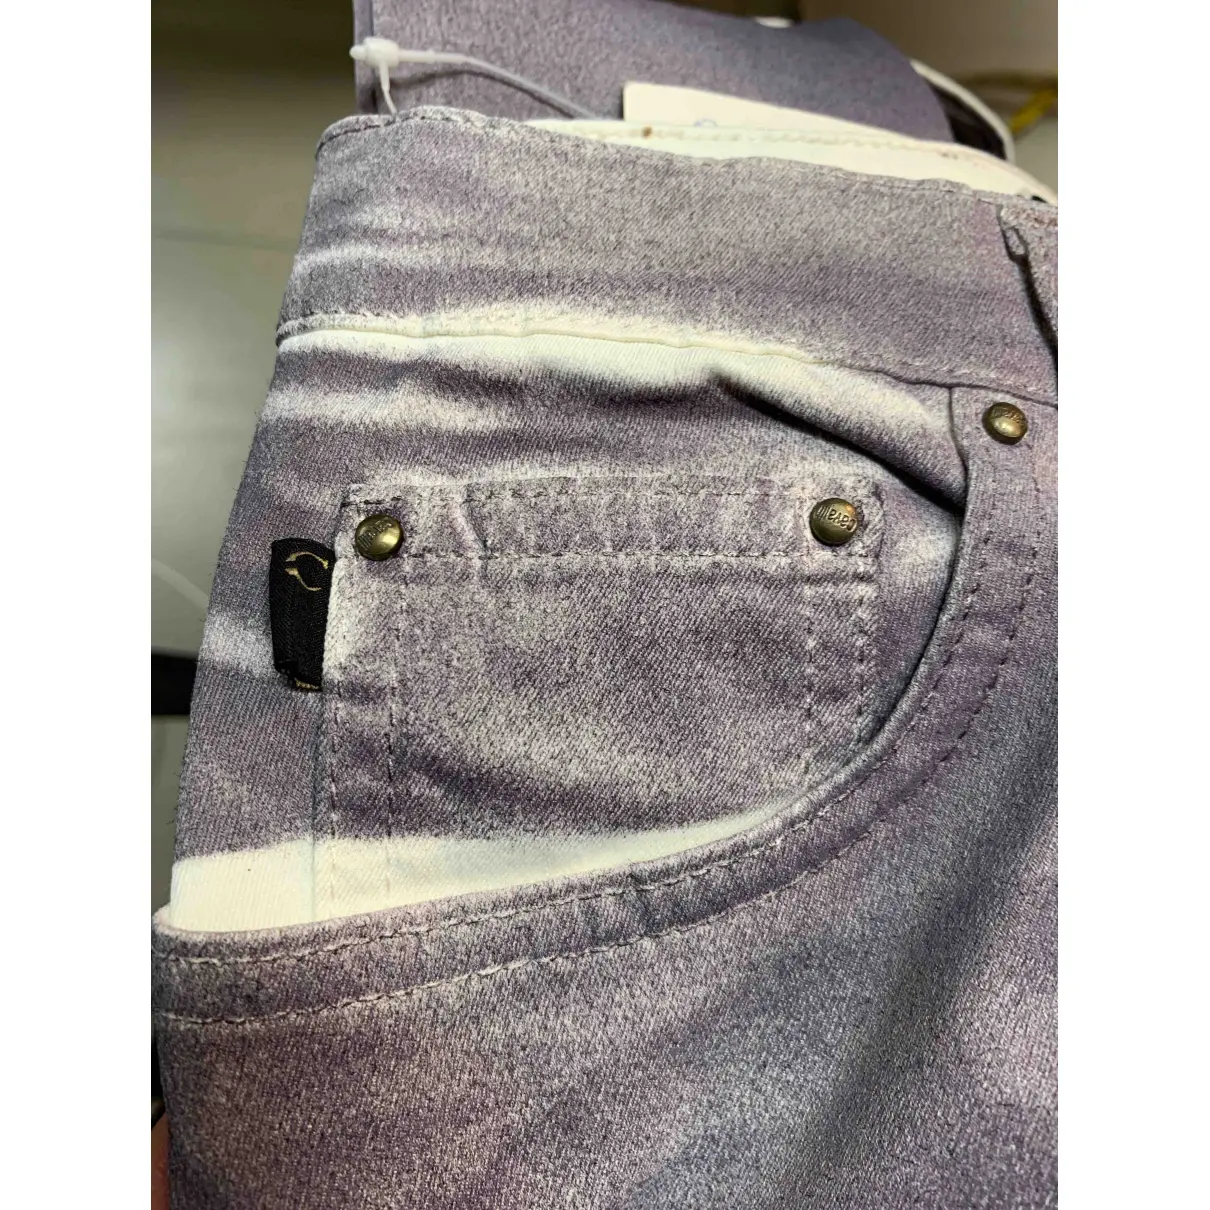 Buy Just Cavalli Purple Cotton - elasthane Jeans online - Vintage